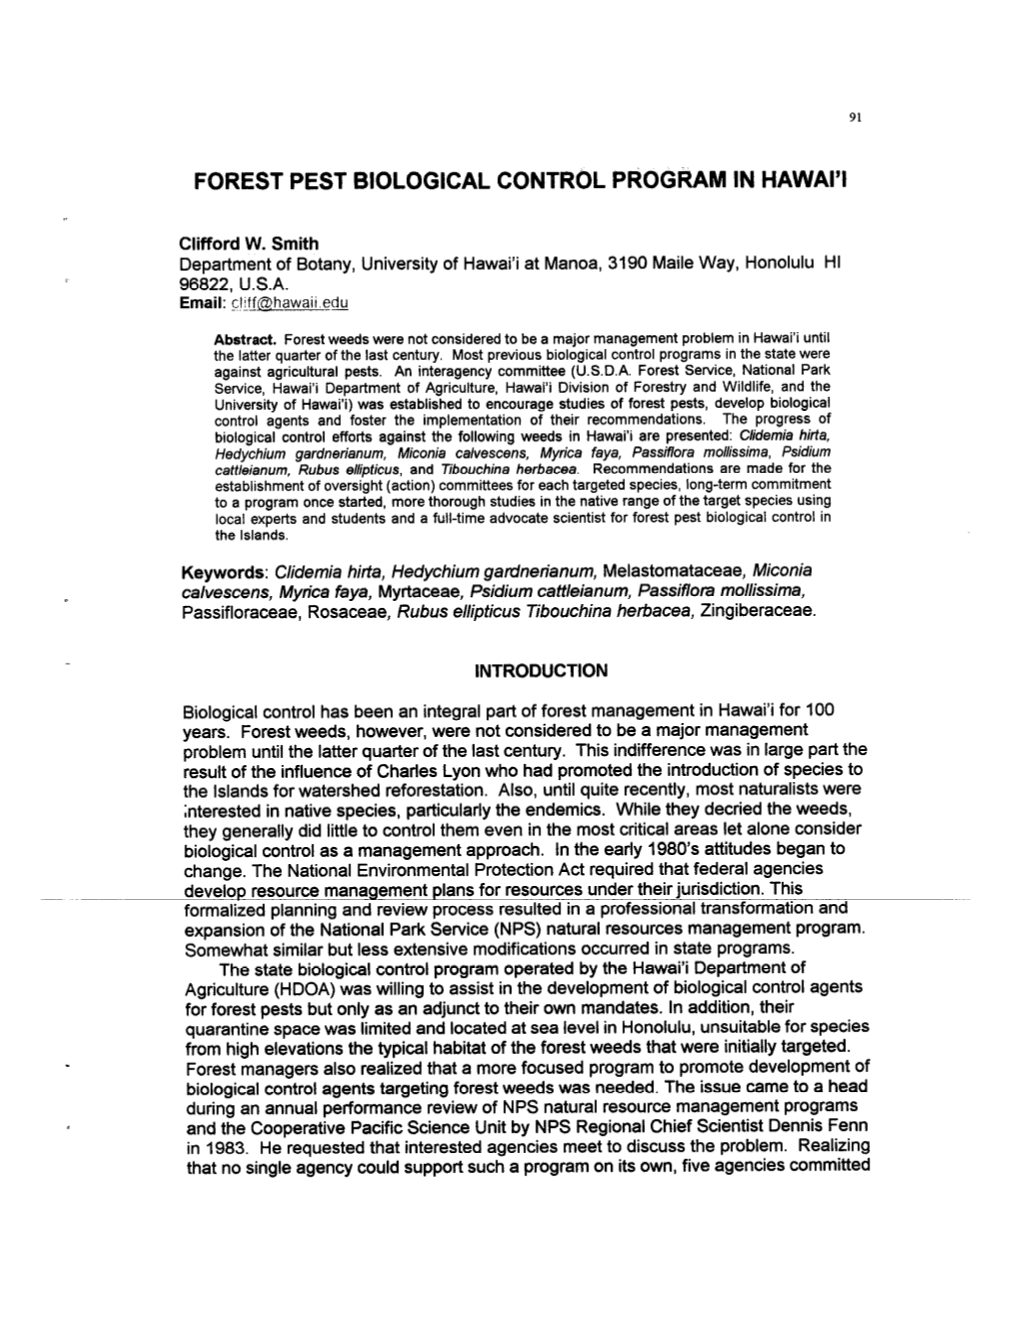 Forest Pest Biological Control Program in Hawaii